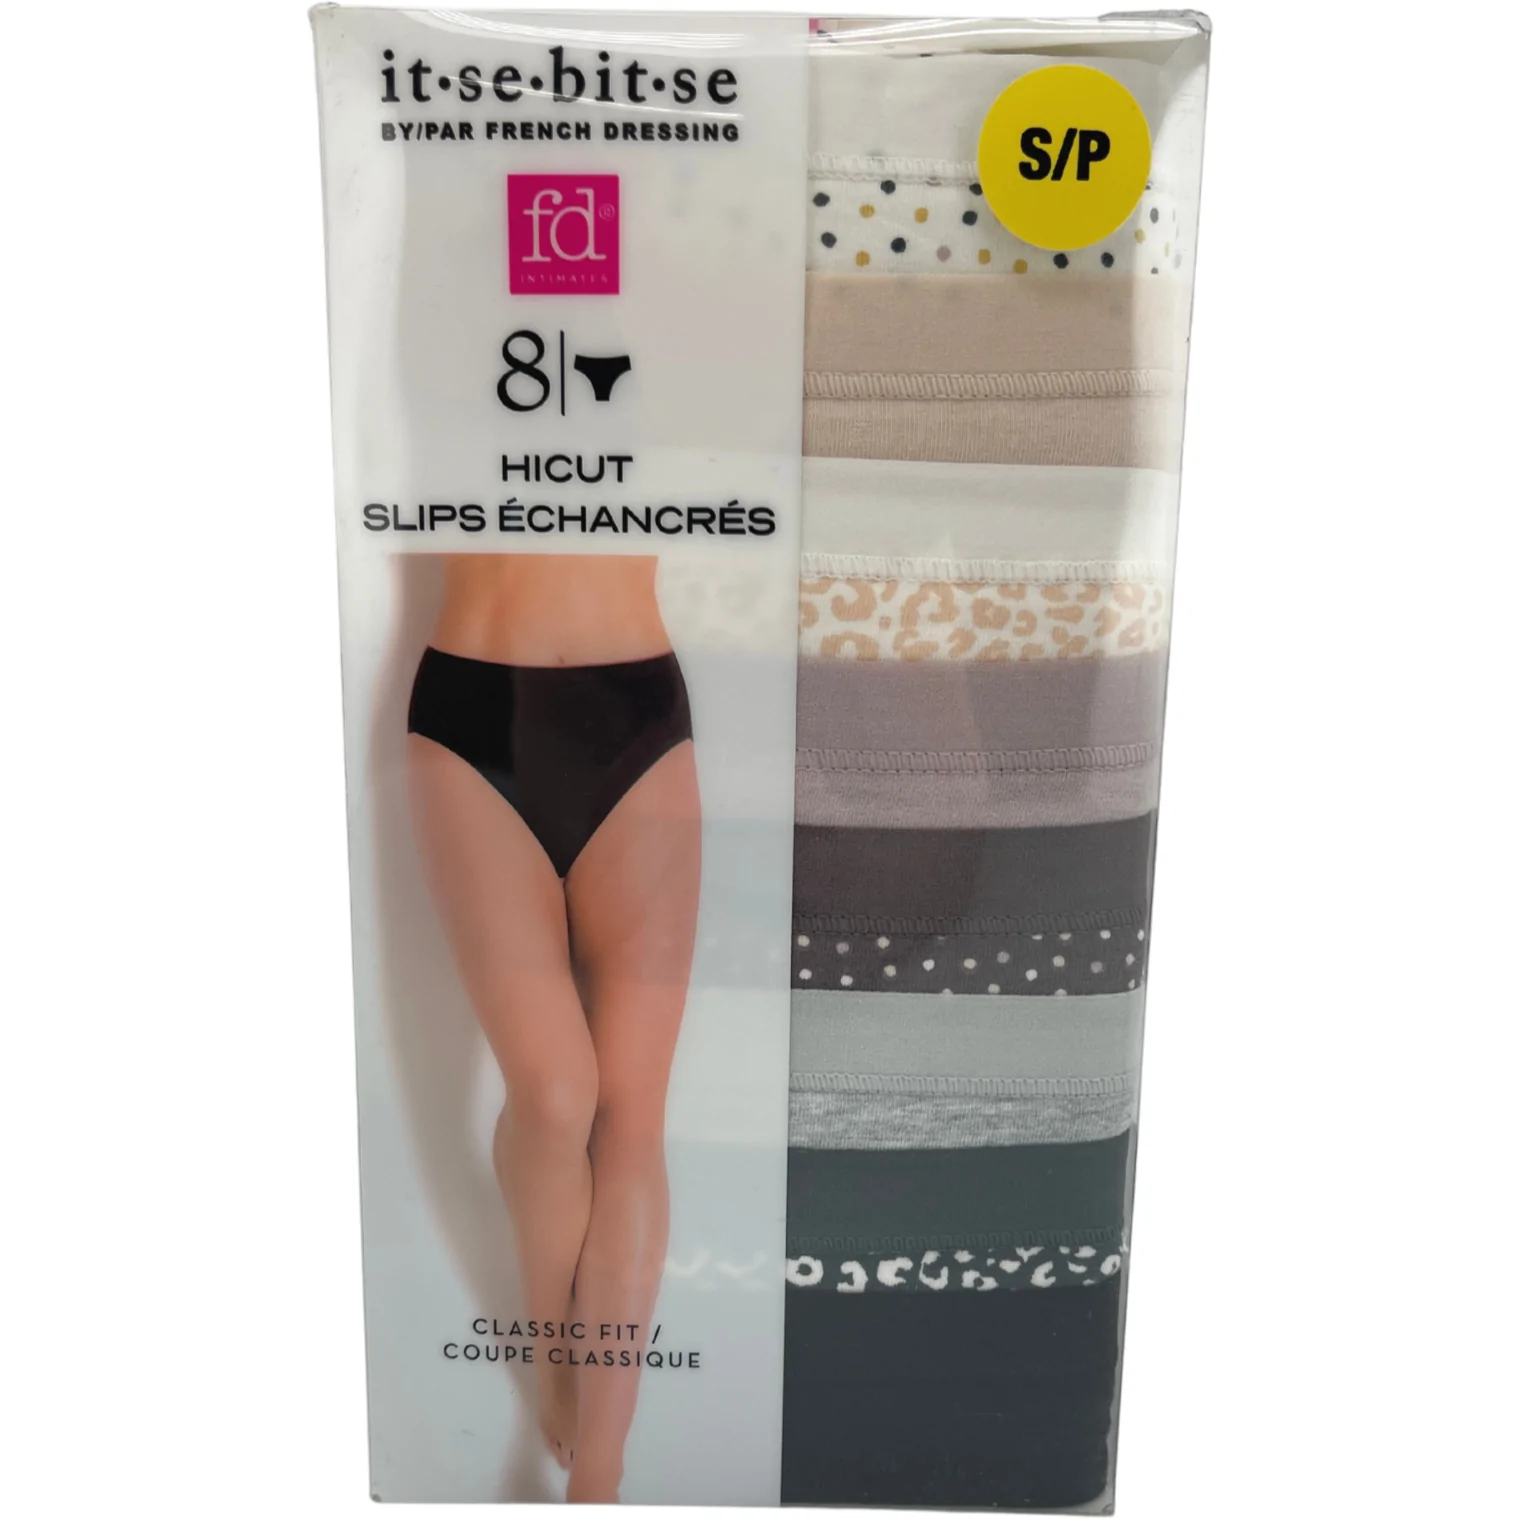 Find more It.se. Bit.se Underwear Size Medium for sale at up to 90